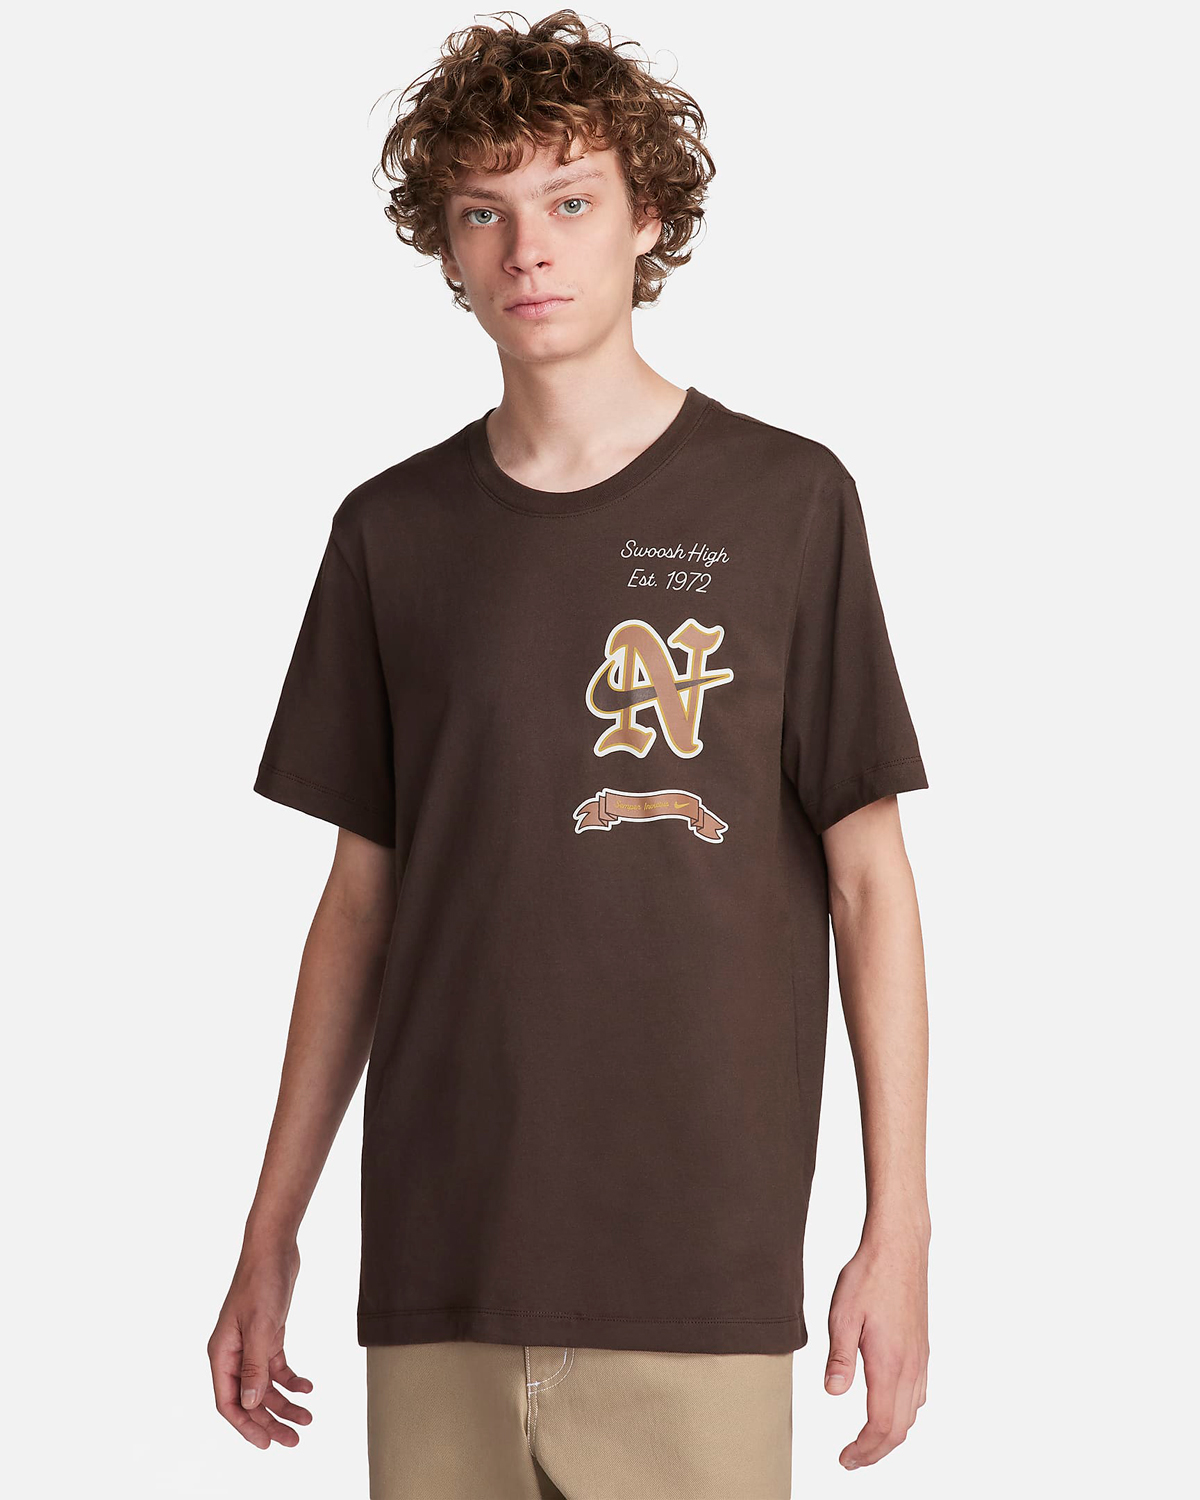 Nike-Sportswear-T-Shirt-Baroque-Brown-Archaeo-Brown-1